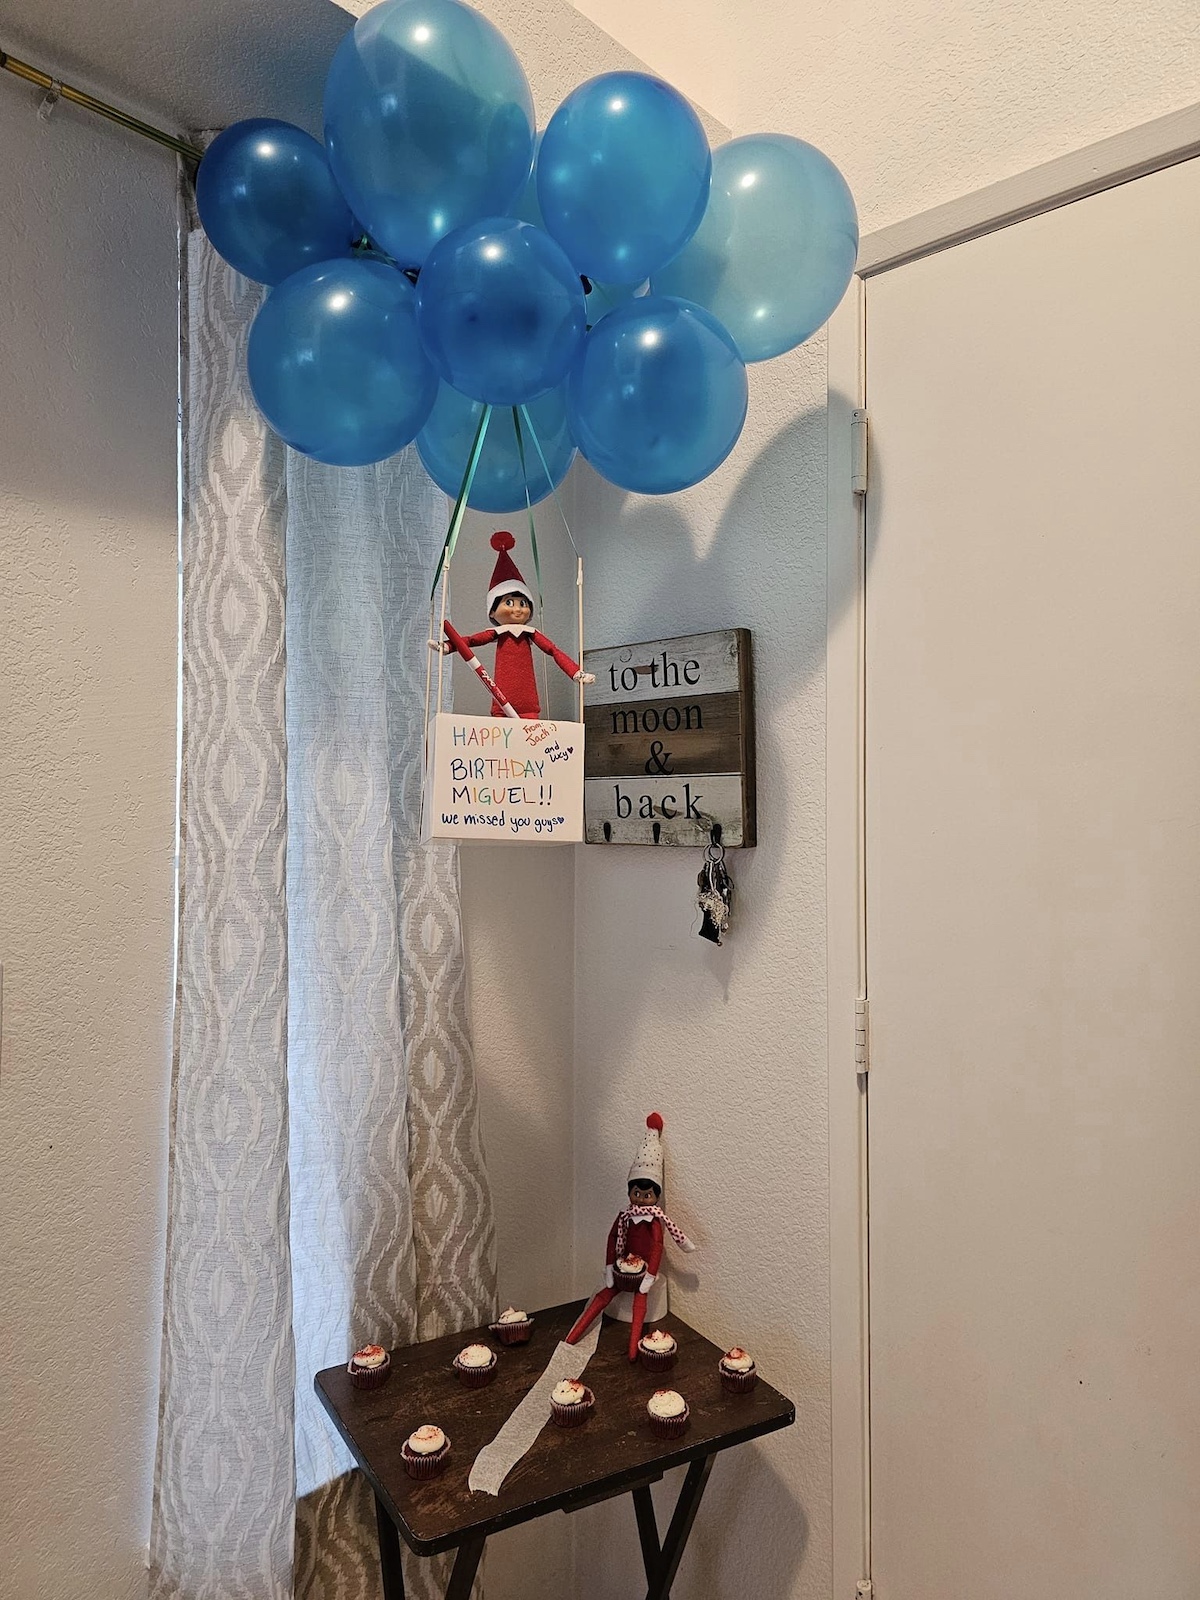 Elf on the shelf birthday balloon arrival.